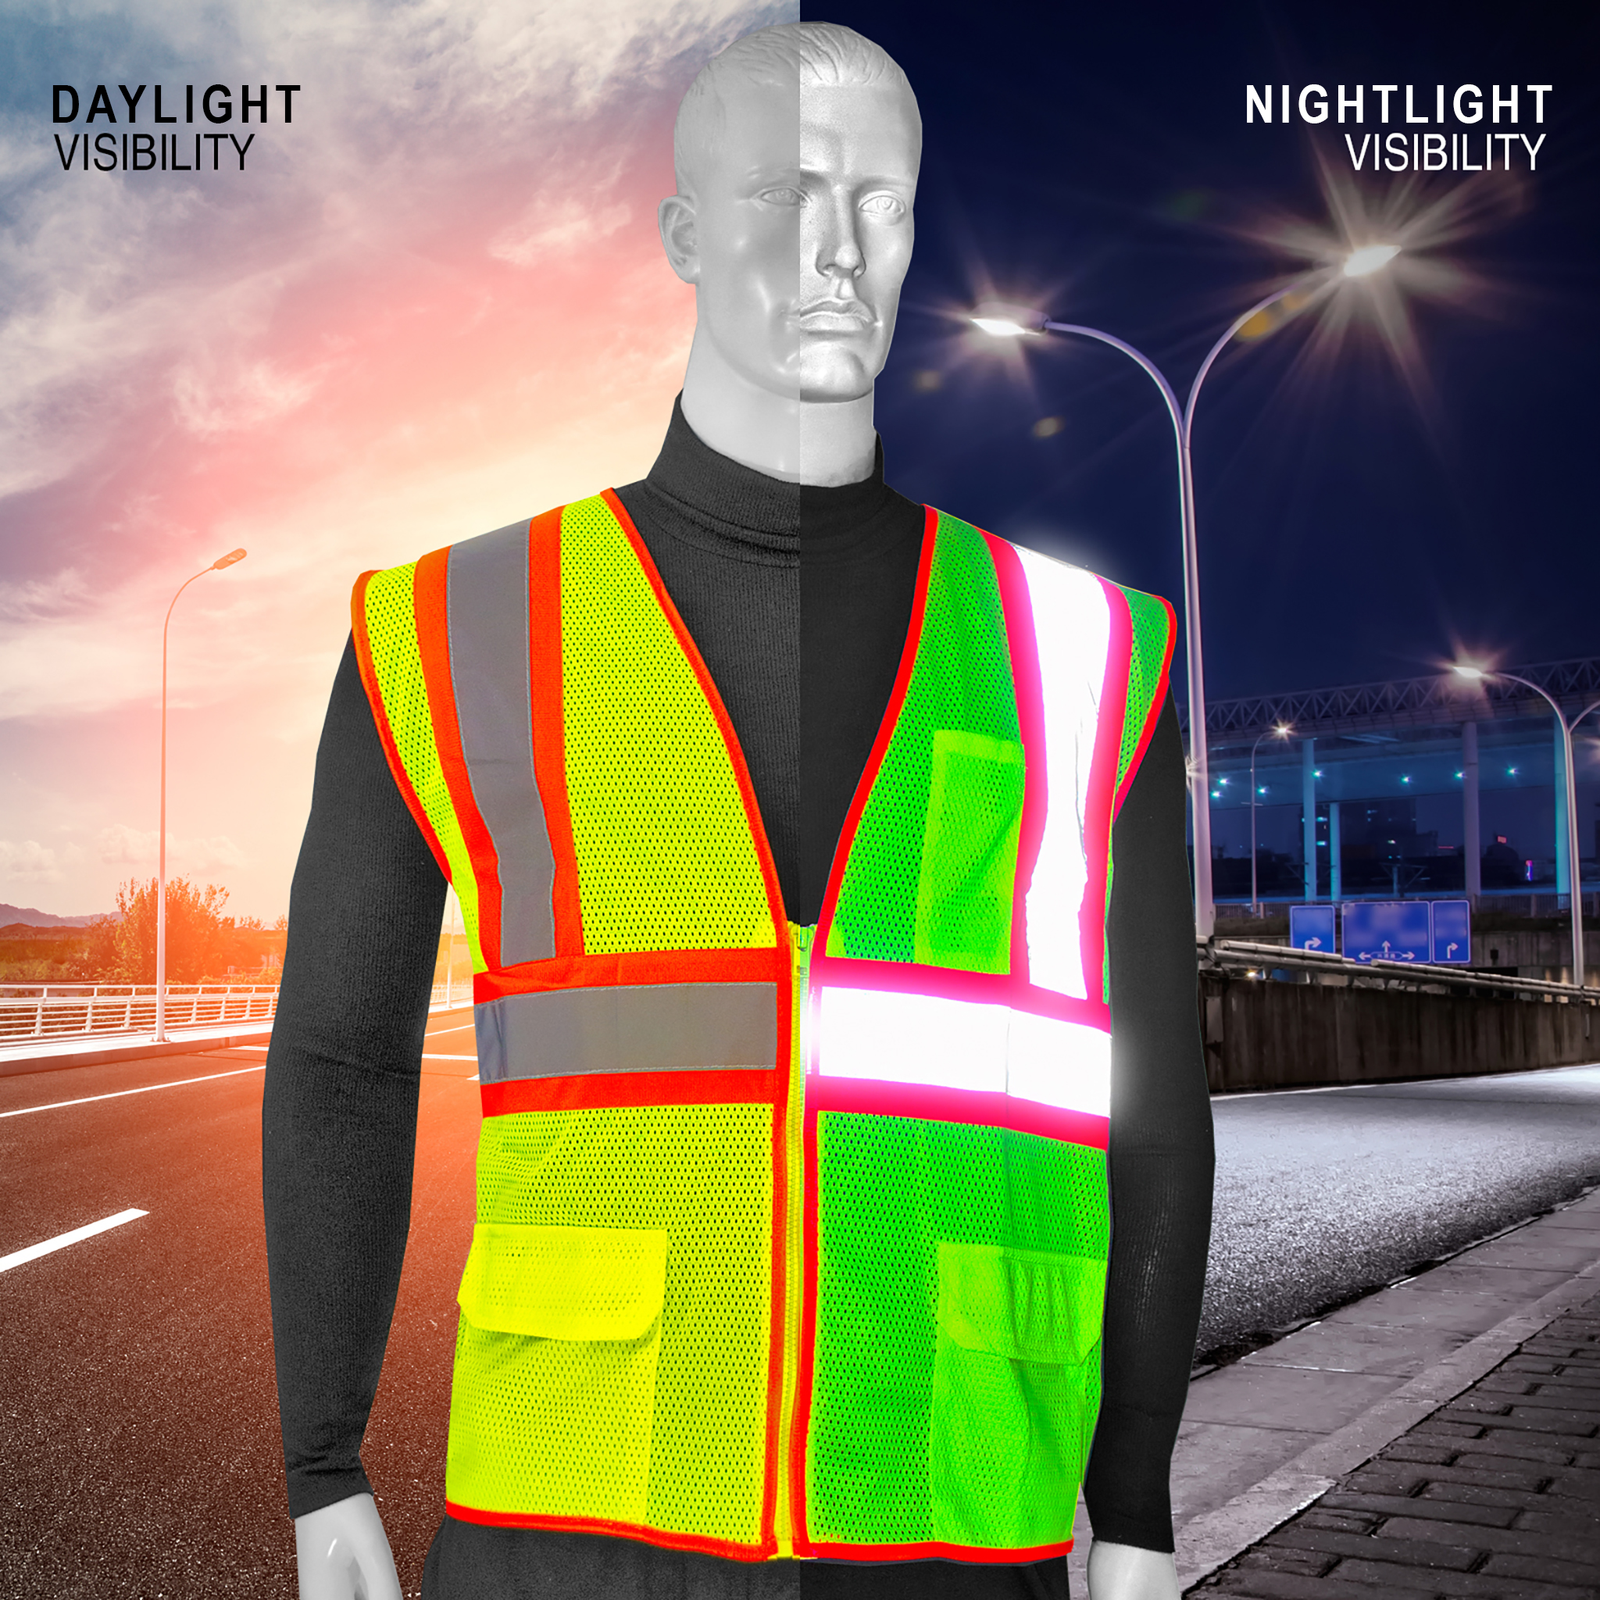 Lime/Orange Traffic Reflective Vest, 100% Polyester, Sleeveless - ZDI -  Safety PPE, Uniforms and Gifts Wholesaler